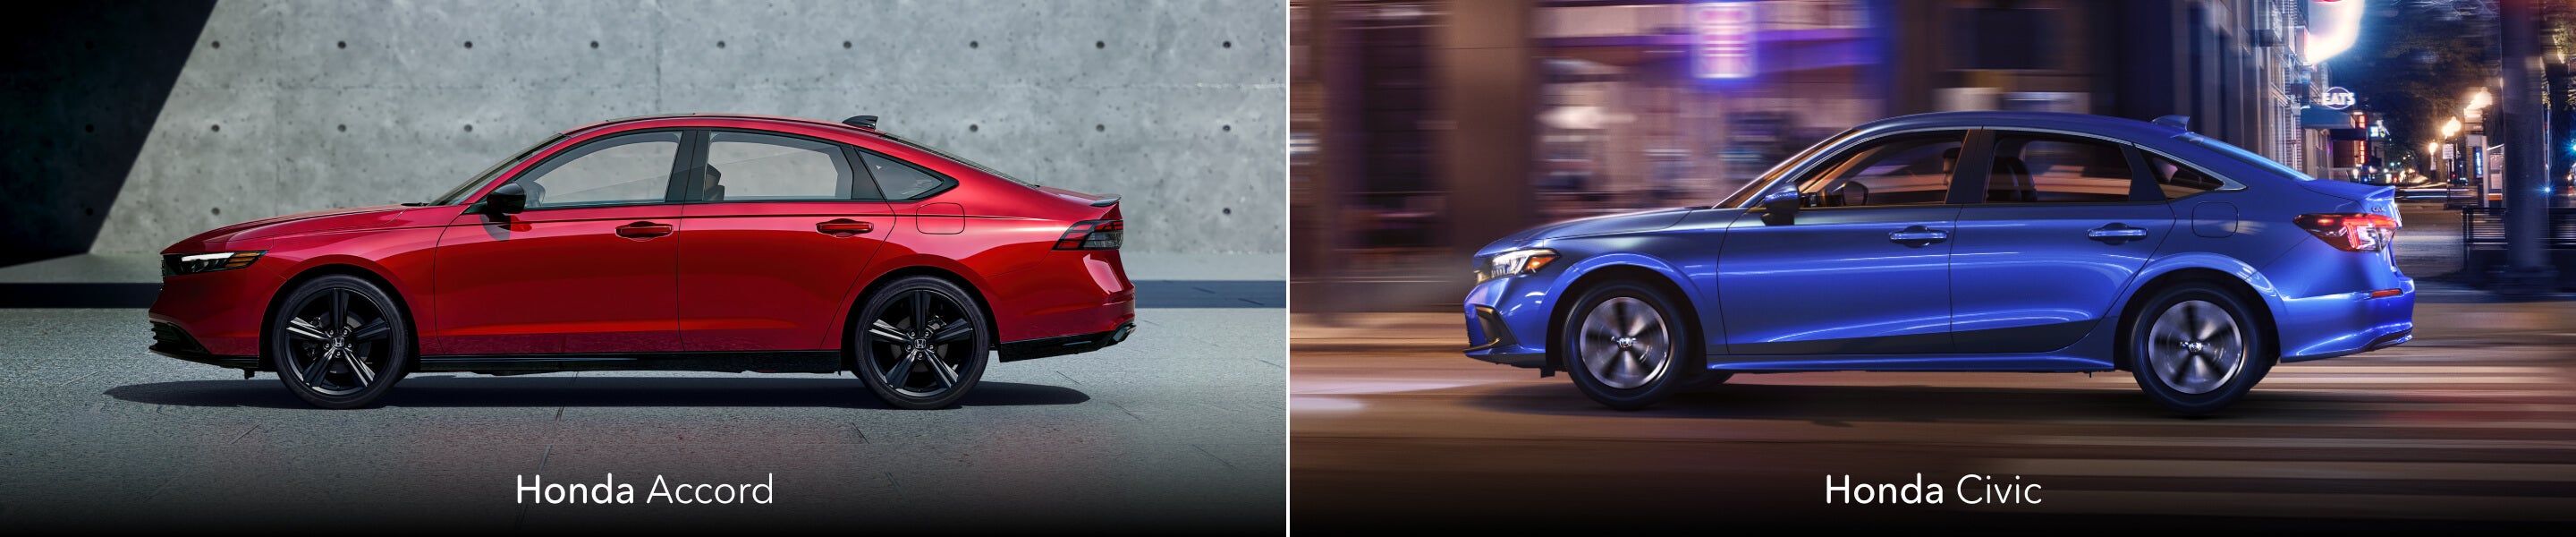 Honda Accord vs Honda Civic Comparison